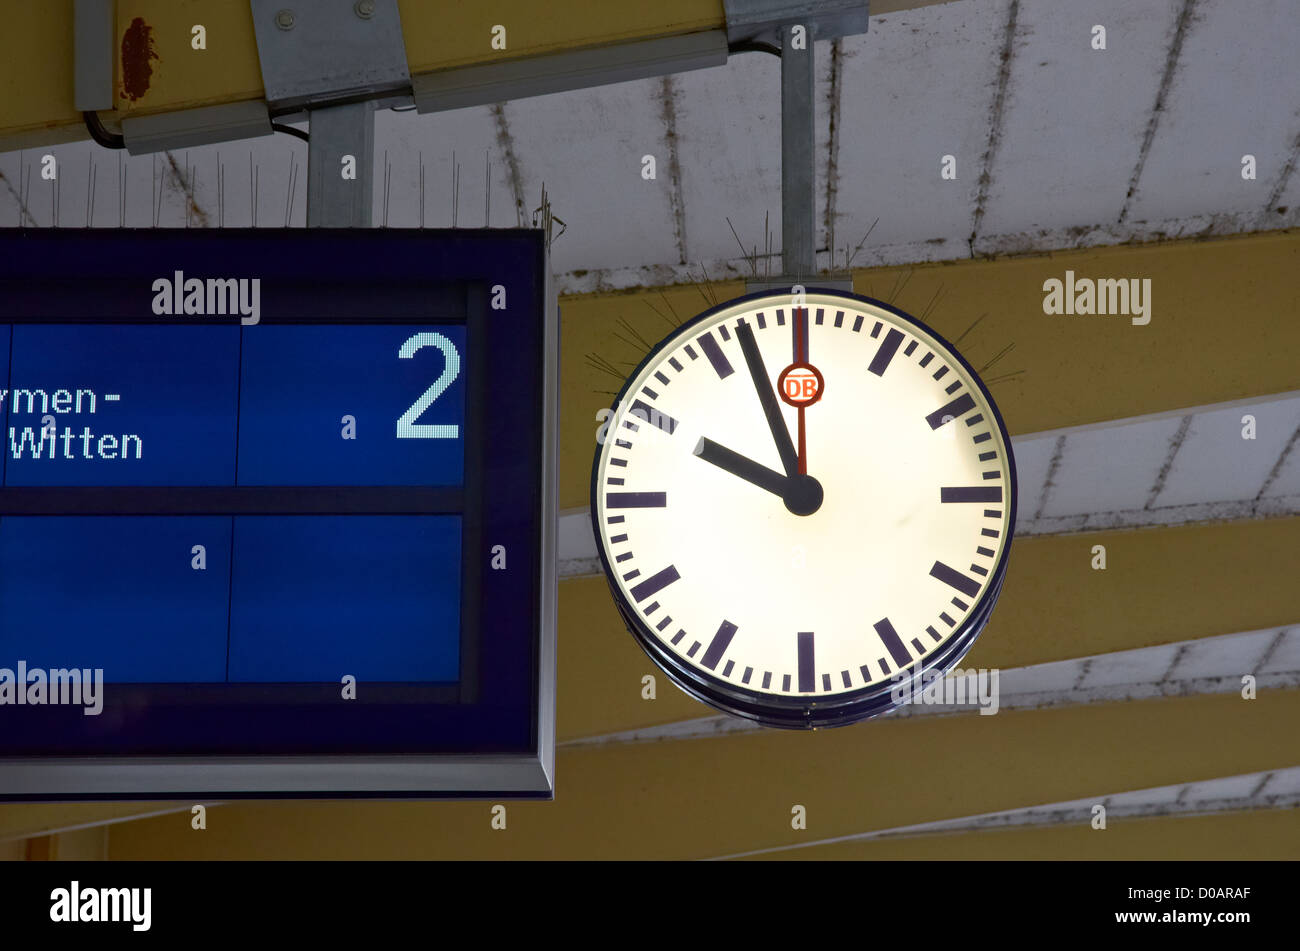 La gare allemande horloge indiquant exactement 10,57 heures. Deutsch Bahnhofsuhr zeigt genau 10,57 mts. Banque D'Images